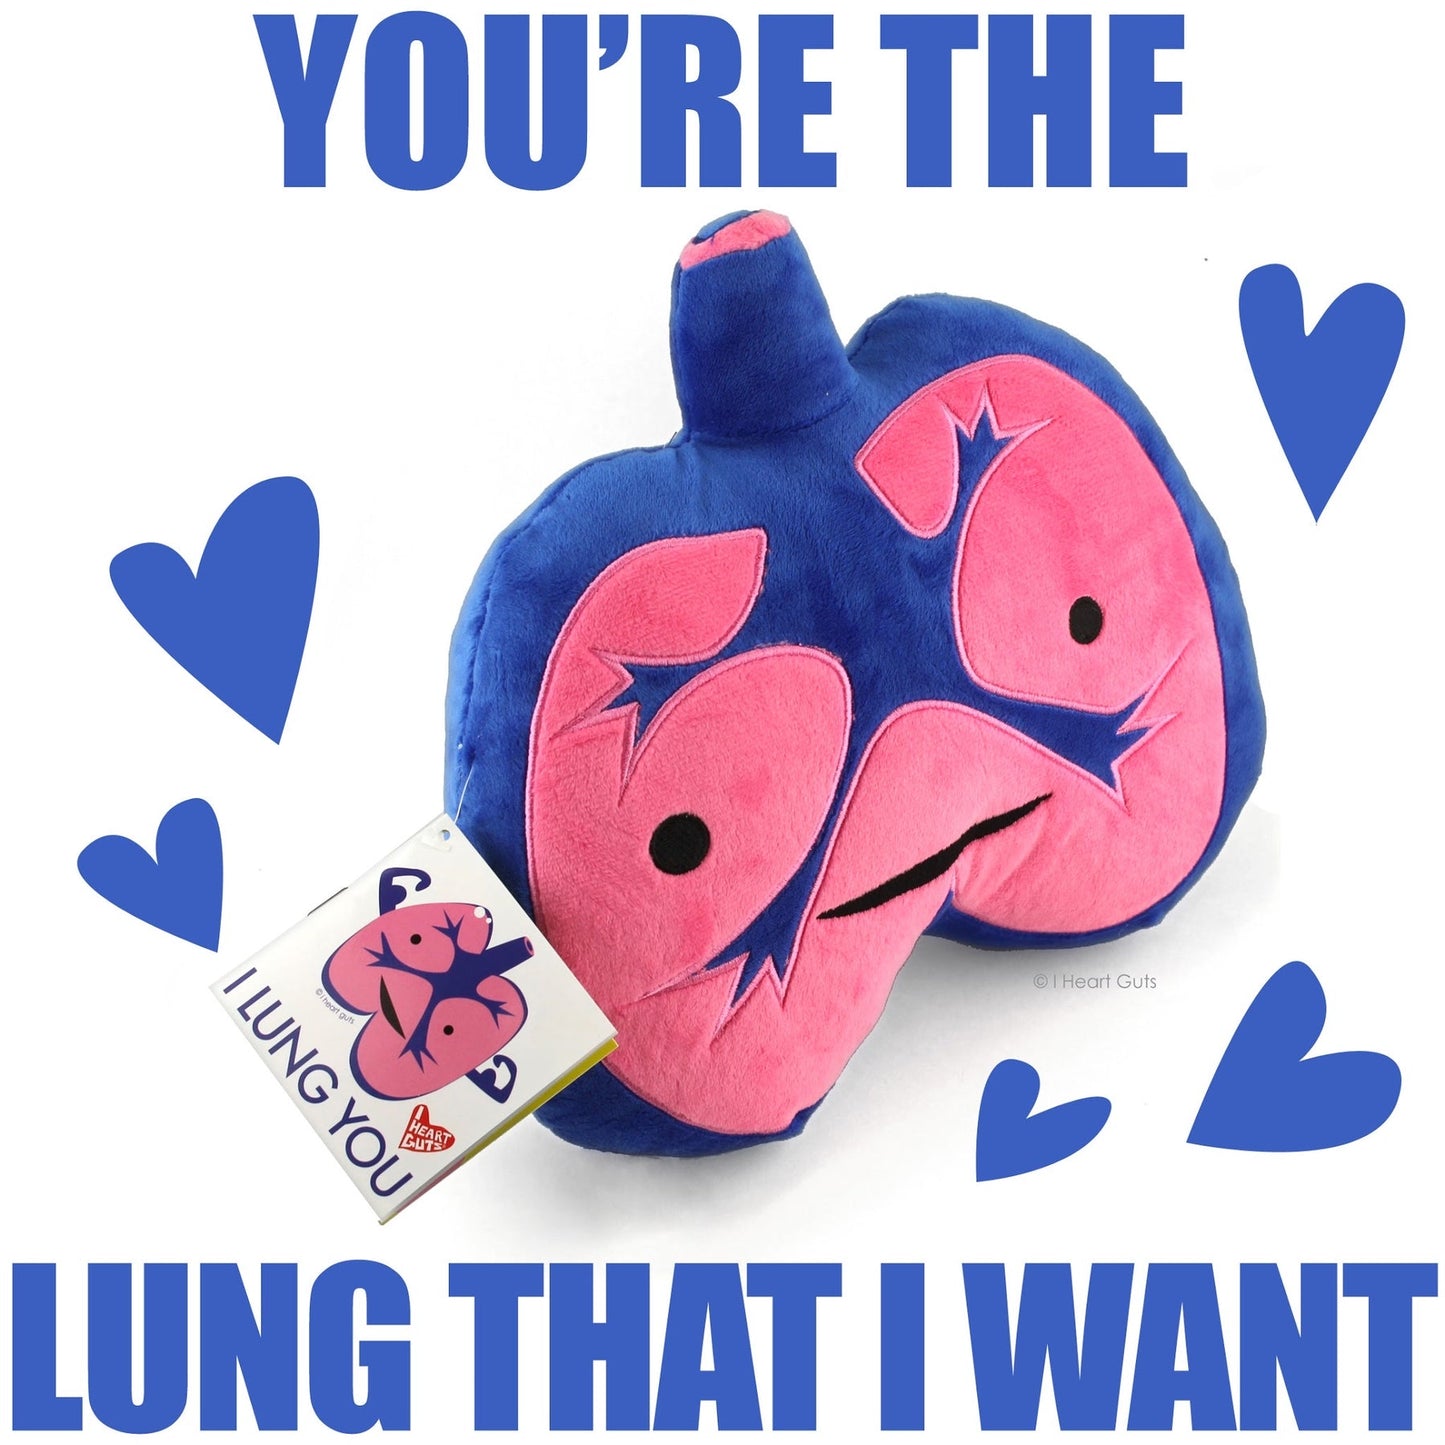 Lungs Plush - I Lung You - Plush Organ Stuffed Toy Pillow